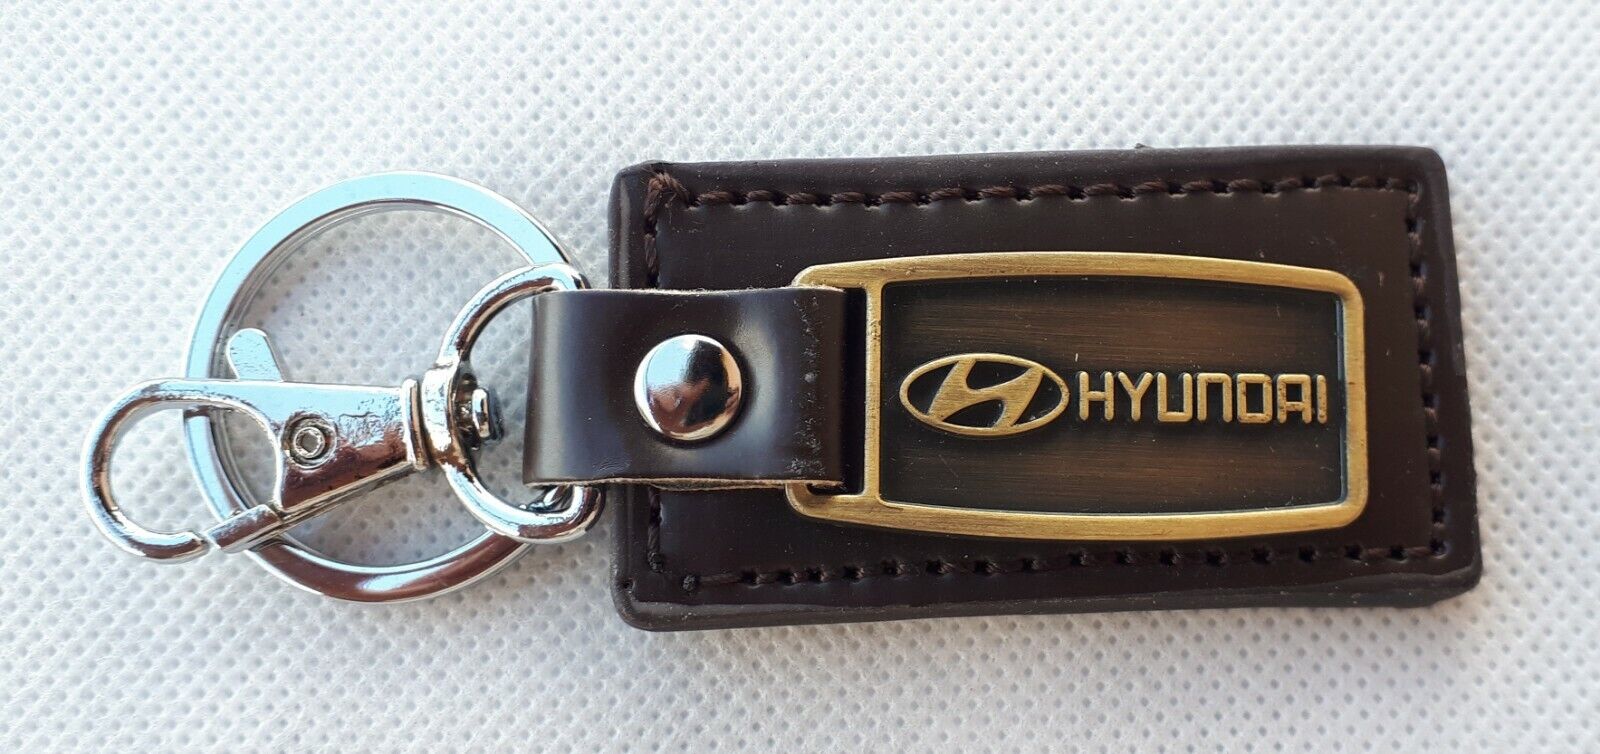 HYUNDAI - South Korean auto company car, auto, automotive, Keychains, Key Chain